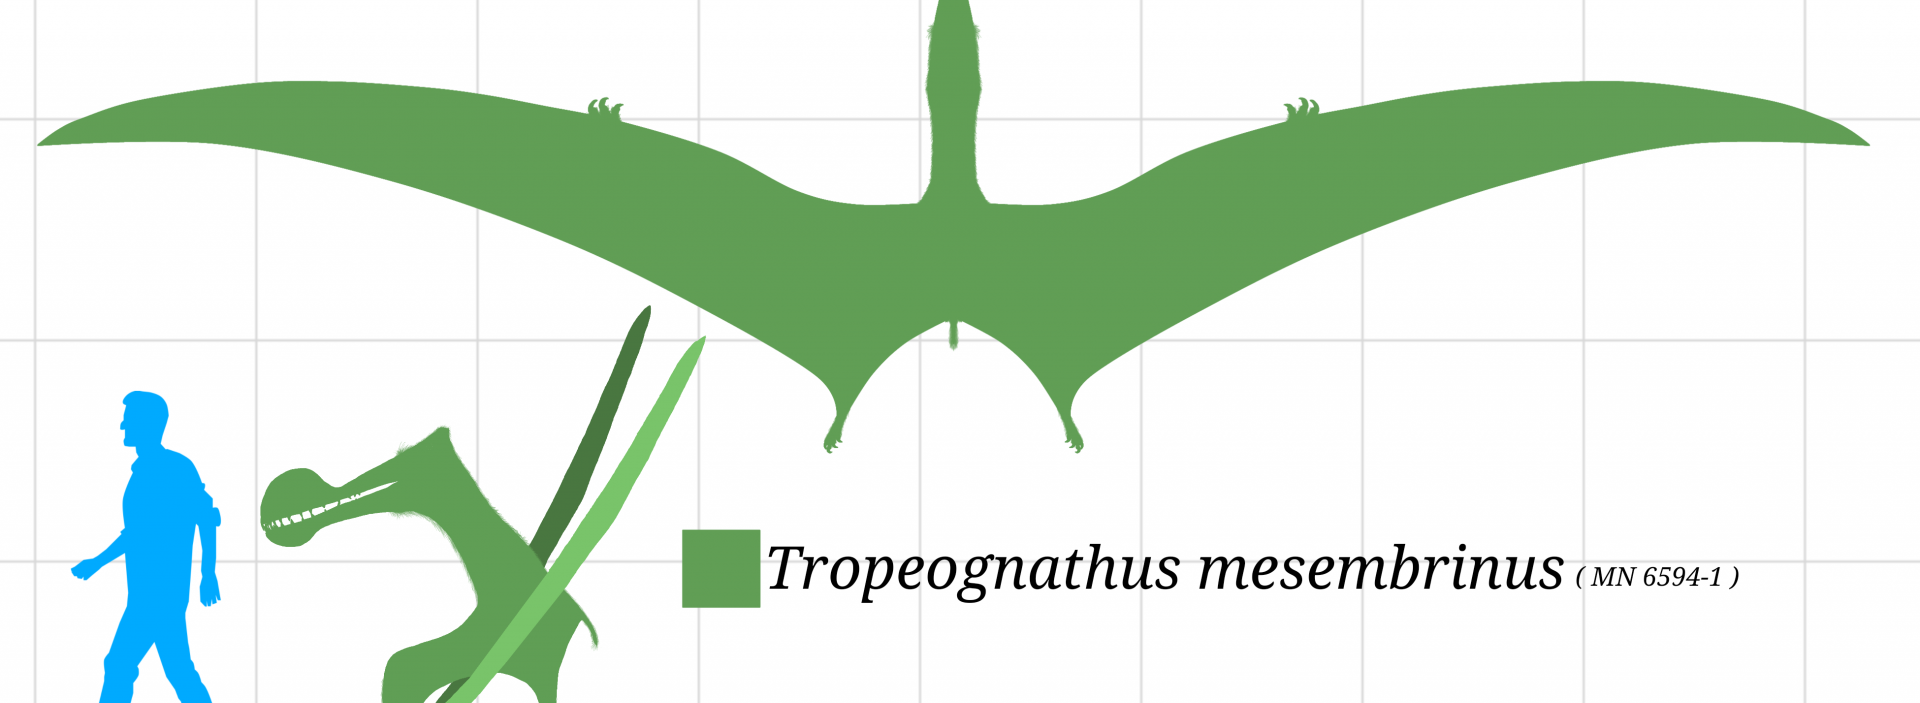 Diagrama de tamanho de Tropeognathus mesembrinus